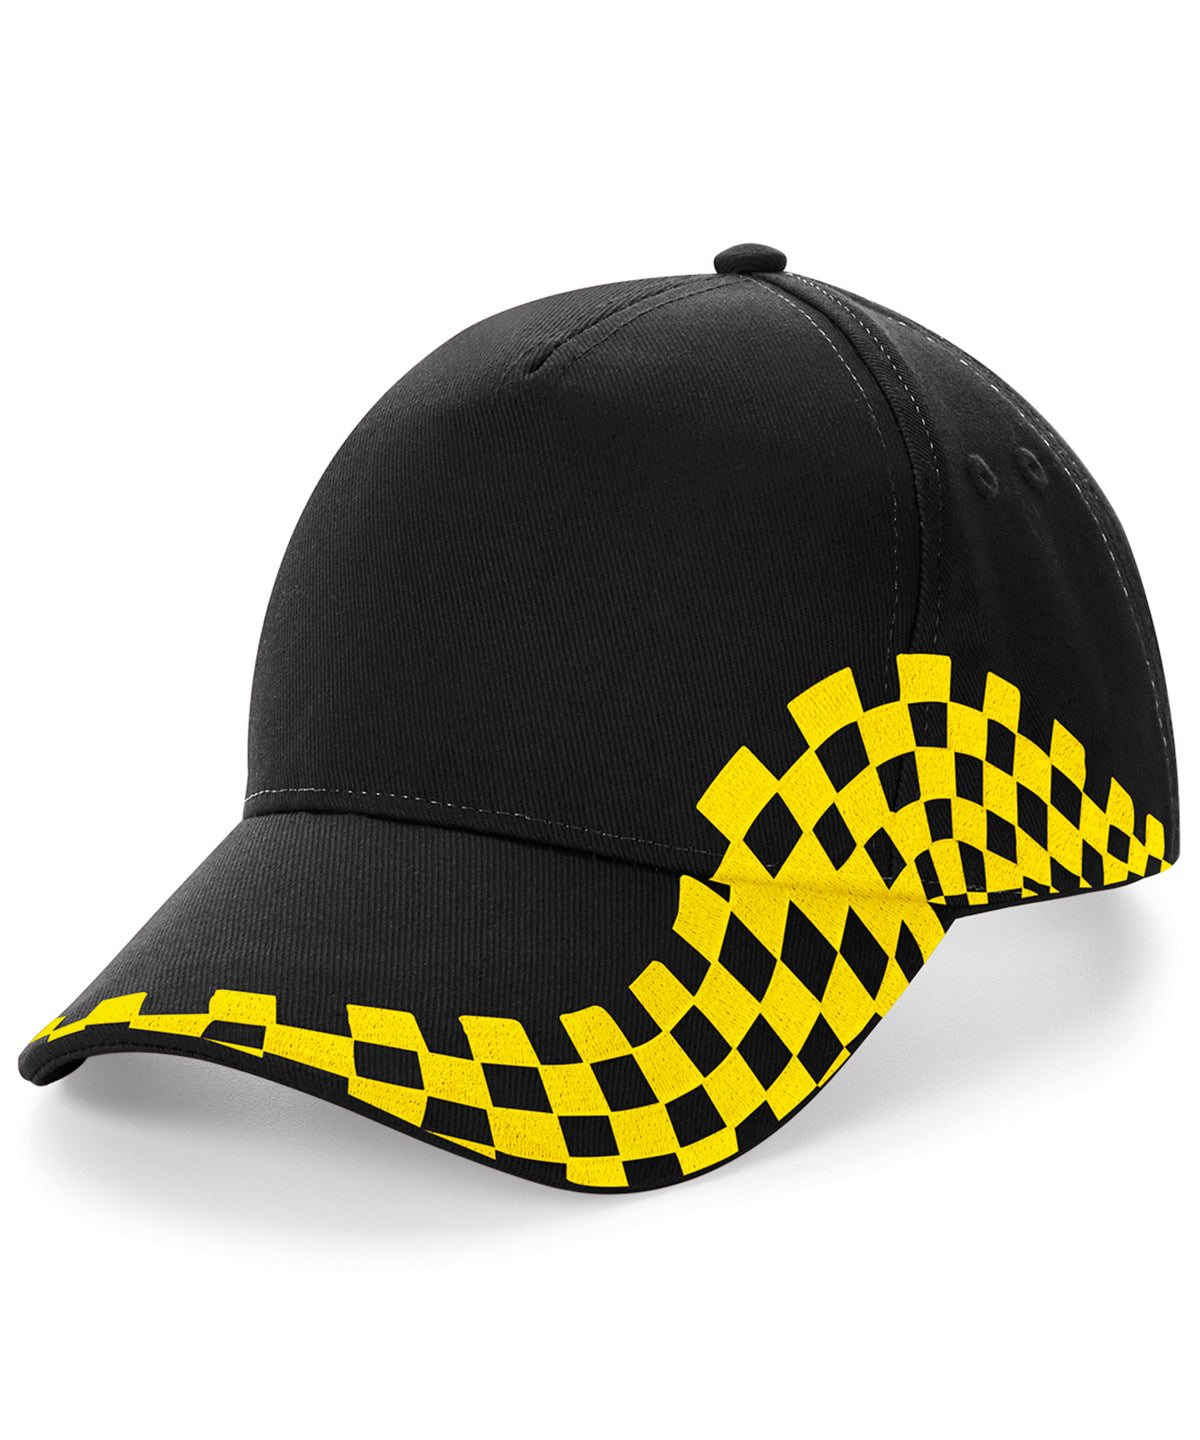 Personalised Caps - Black Beechfield Grand Prix cap